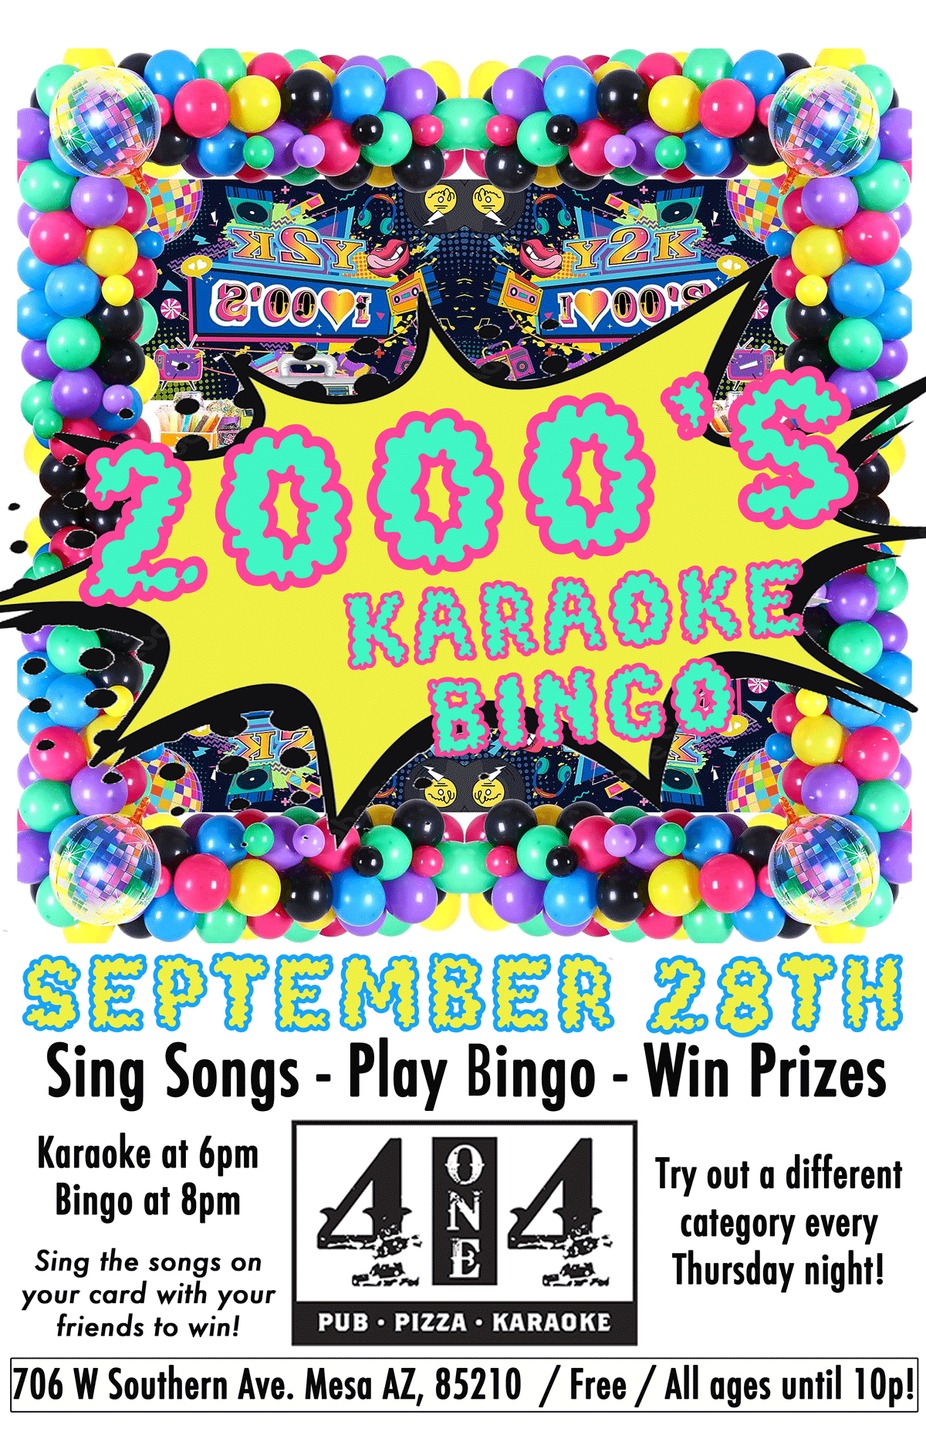 Karaoke Bingo: 2000's Edition event photo